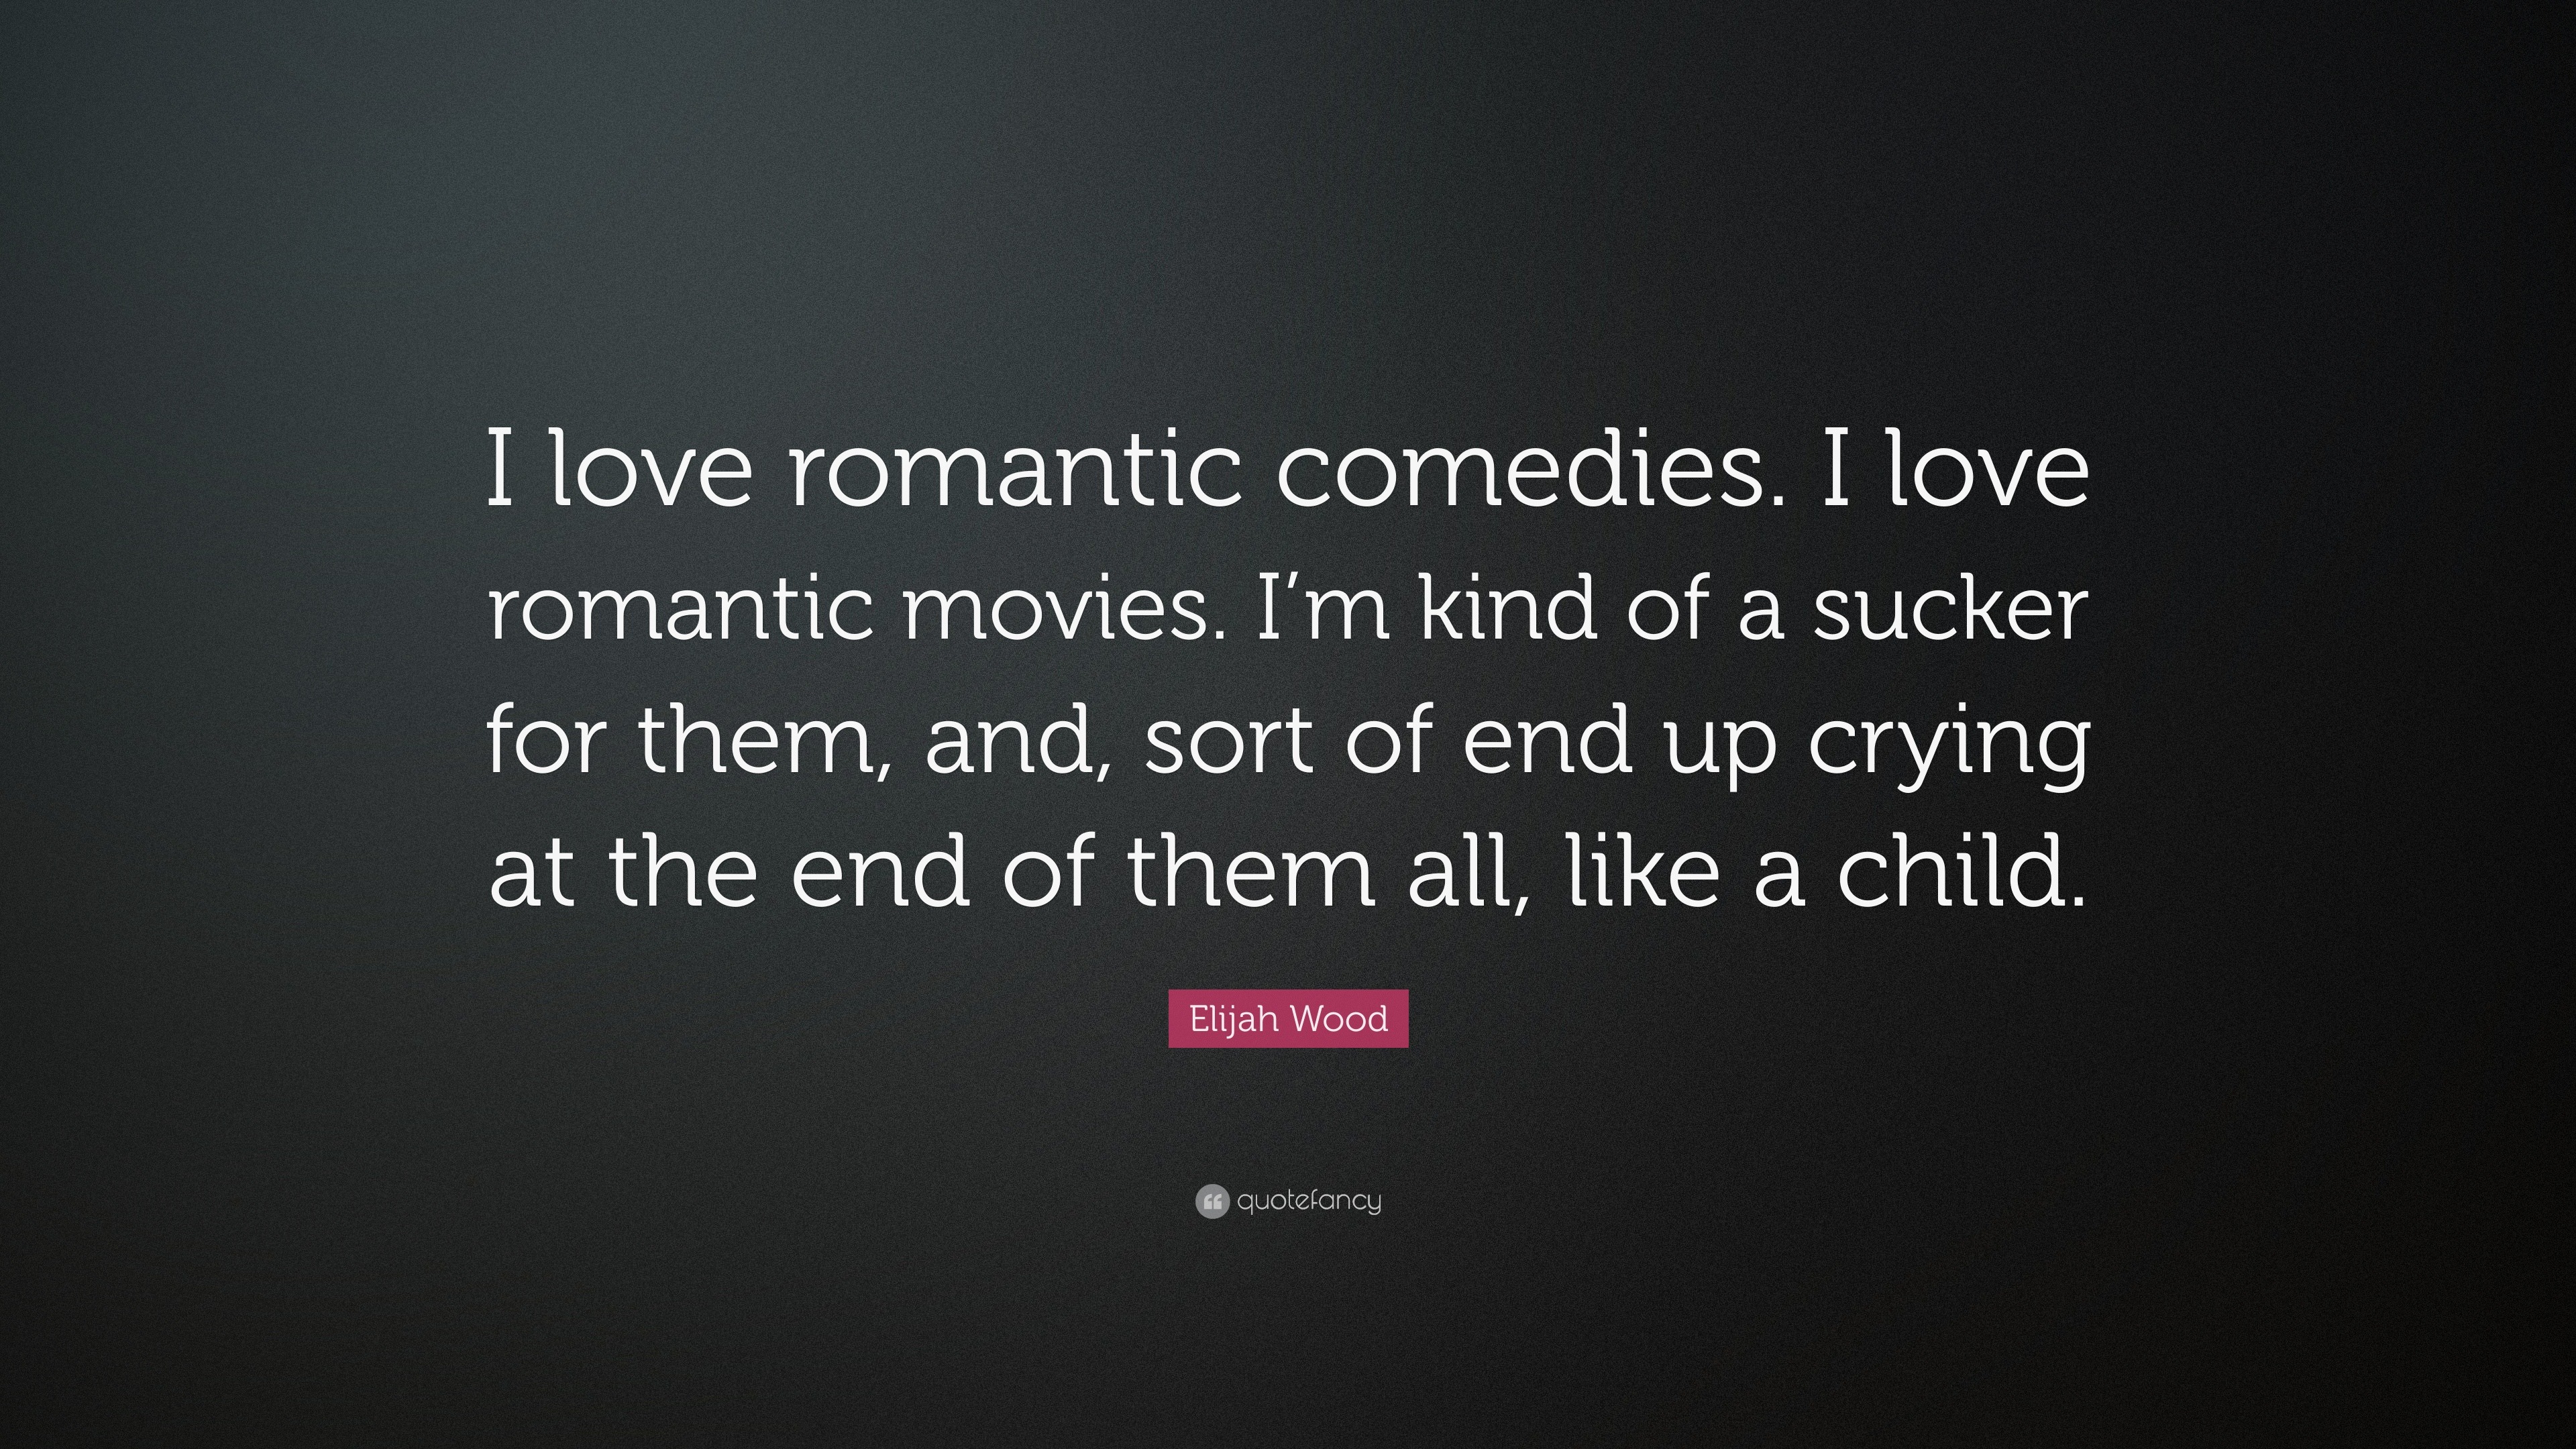 Elijah Wood Quote “I love romantic e s I love romantic movies I